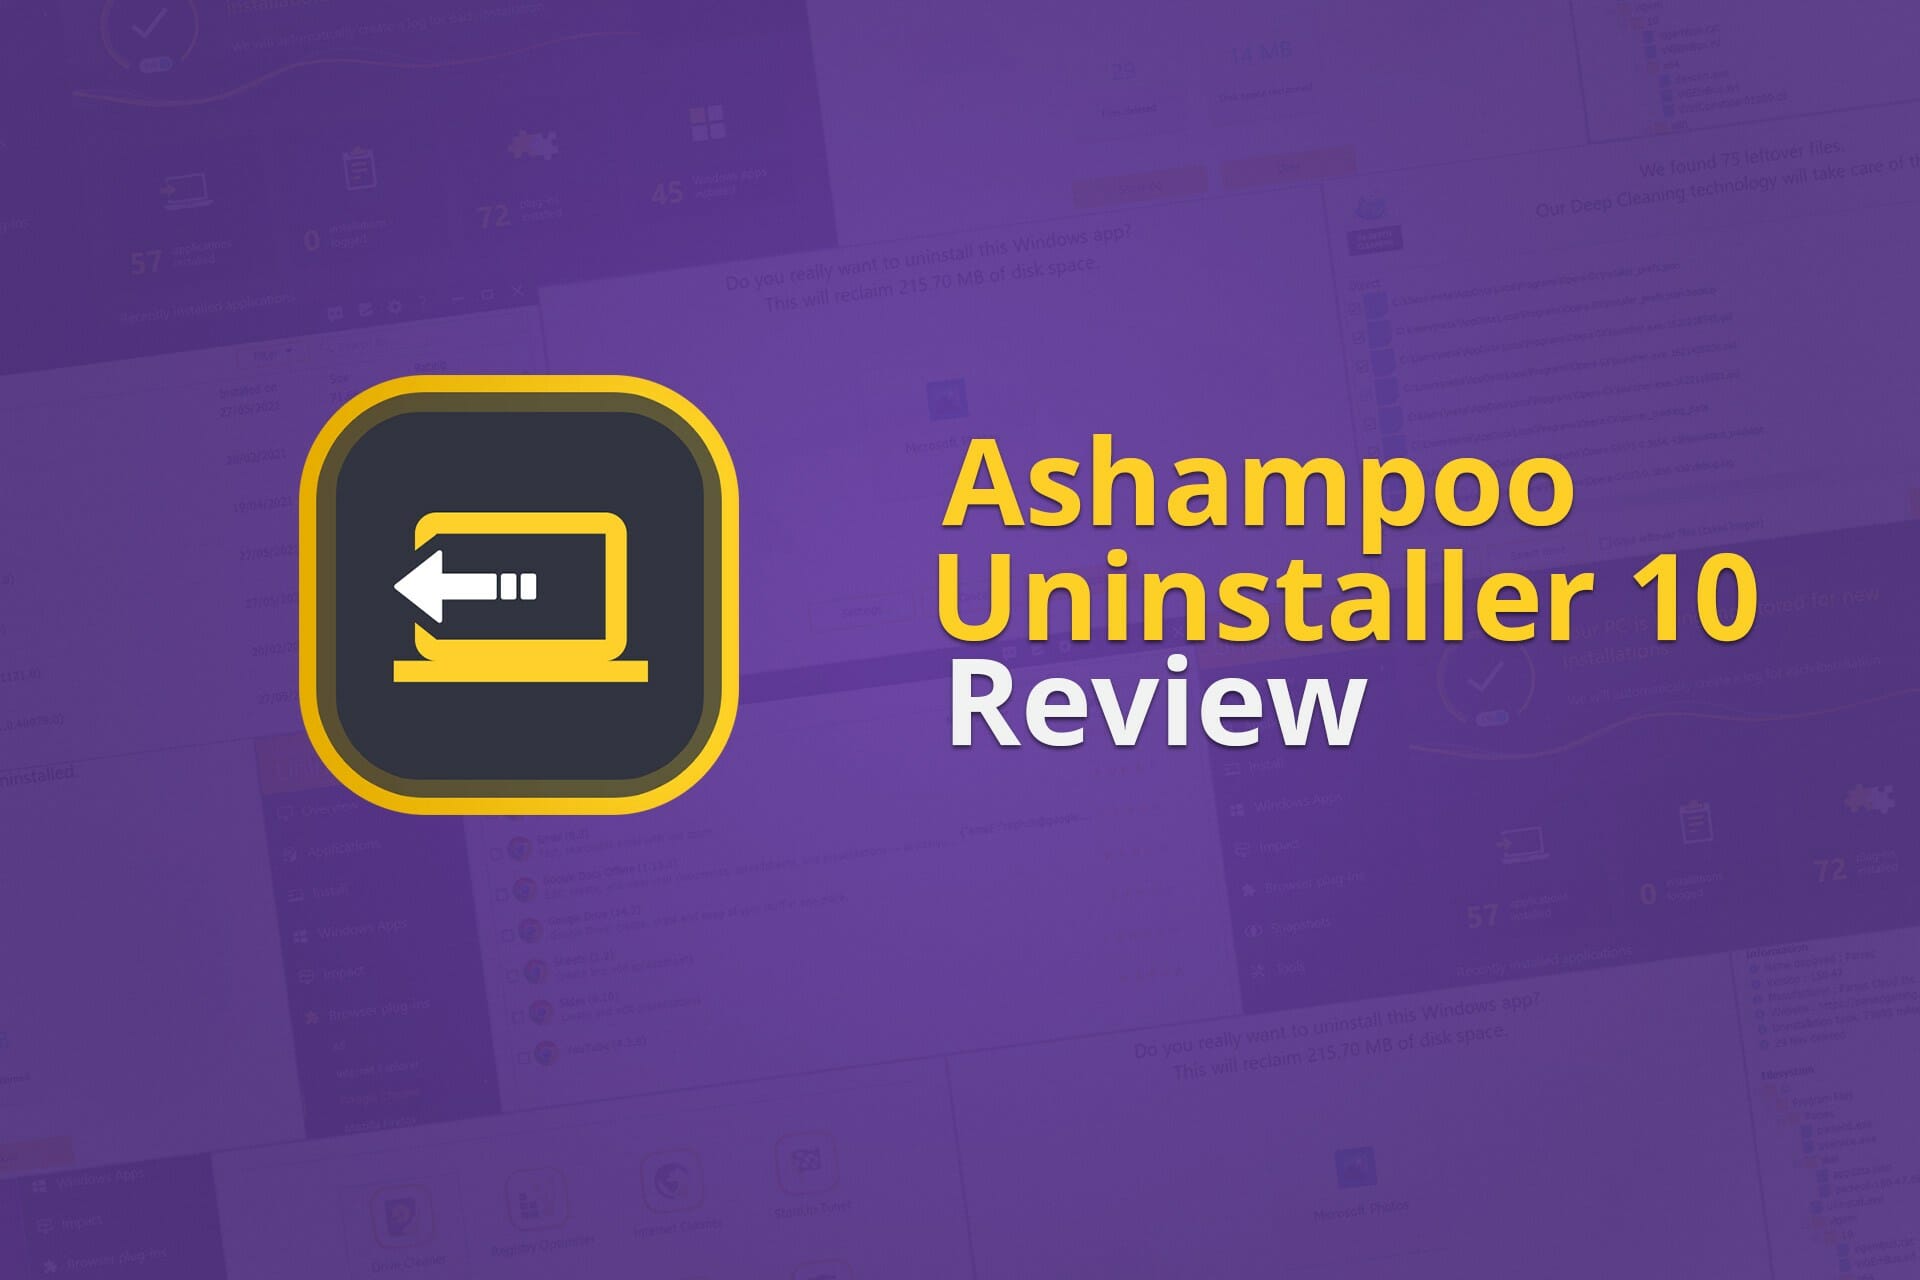 ashampoo uninstaller 10 review